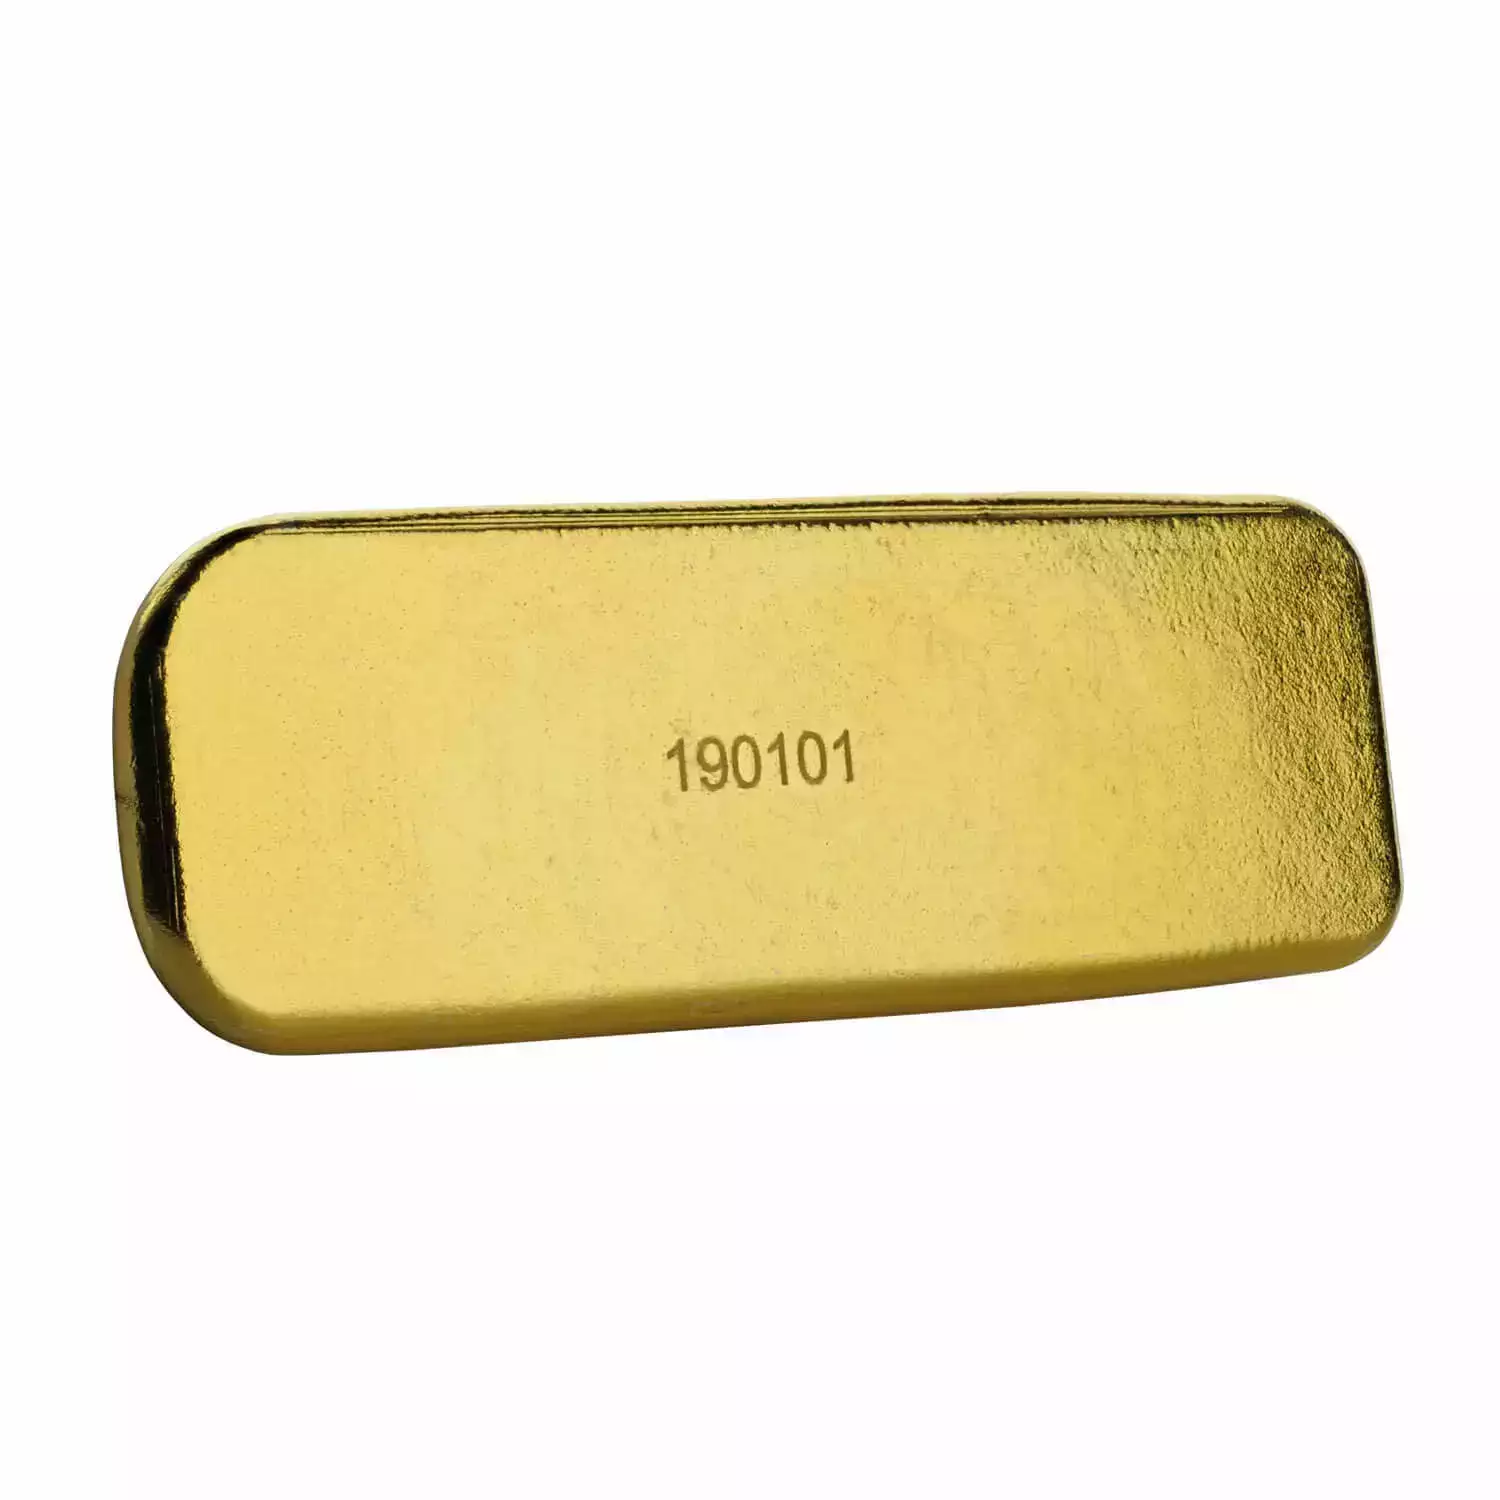 Scottsdale Mint 100g Gold Lion Bar (5)